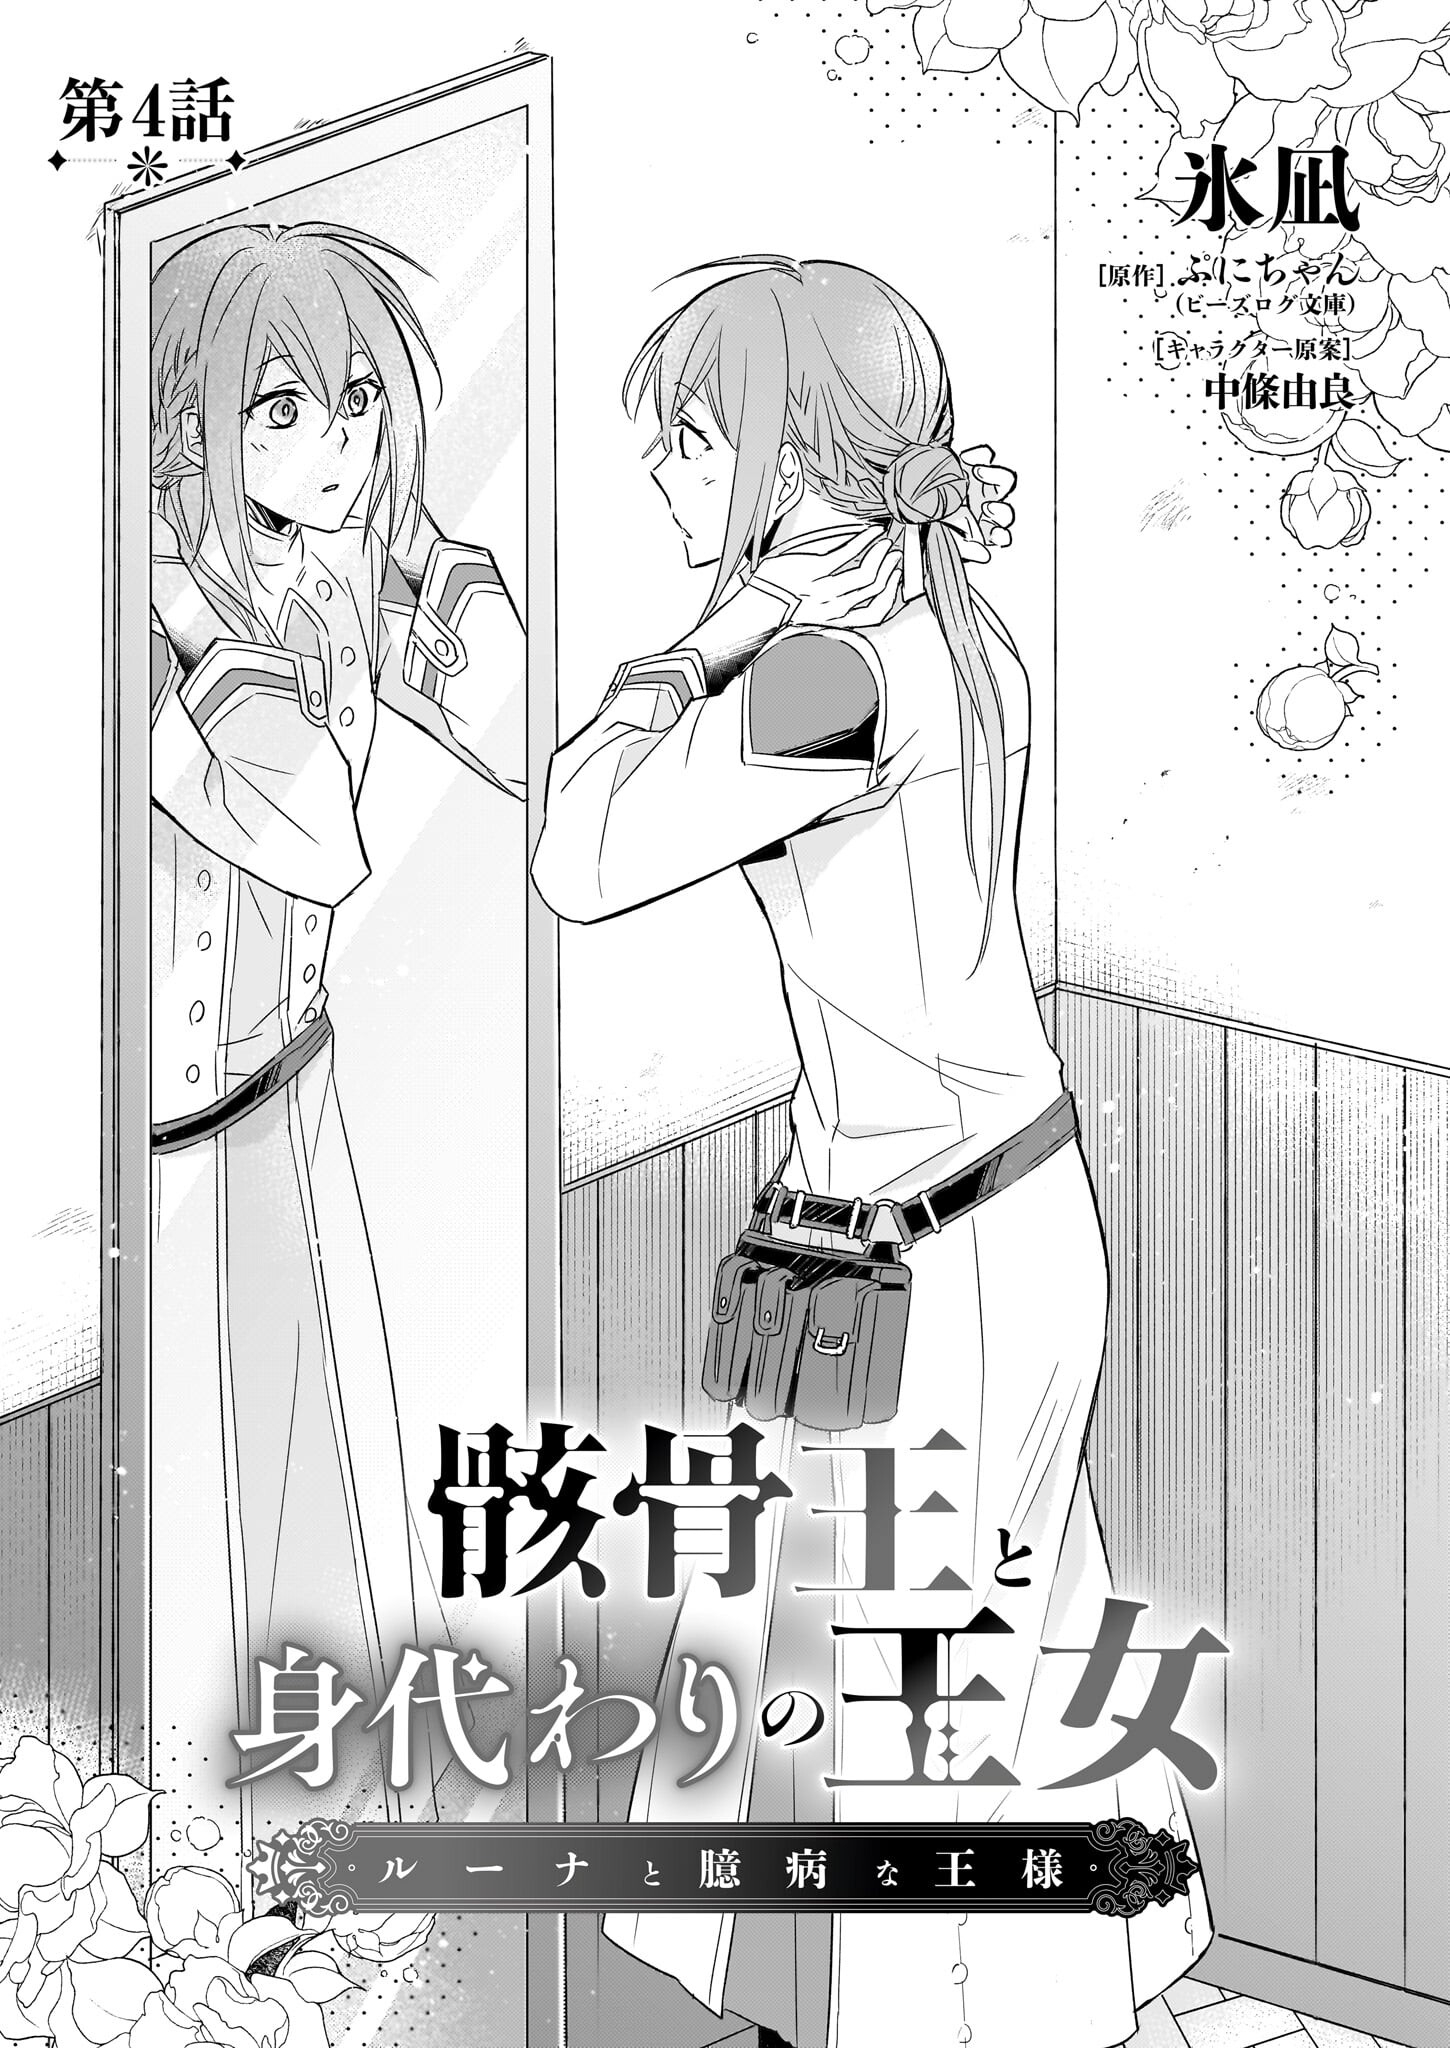 Gaikotsu Ou to Migawari no Oujo – Luna to Okubyou na Ousama - Chapter 4 - Page 2